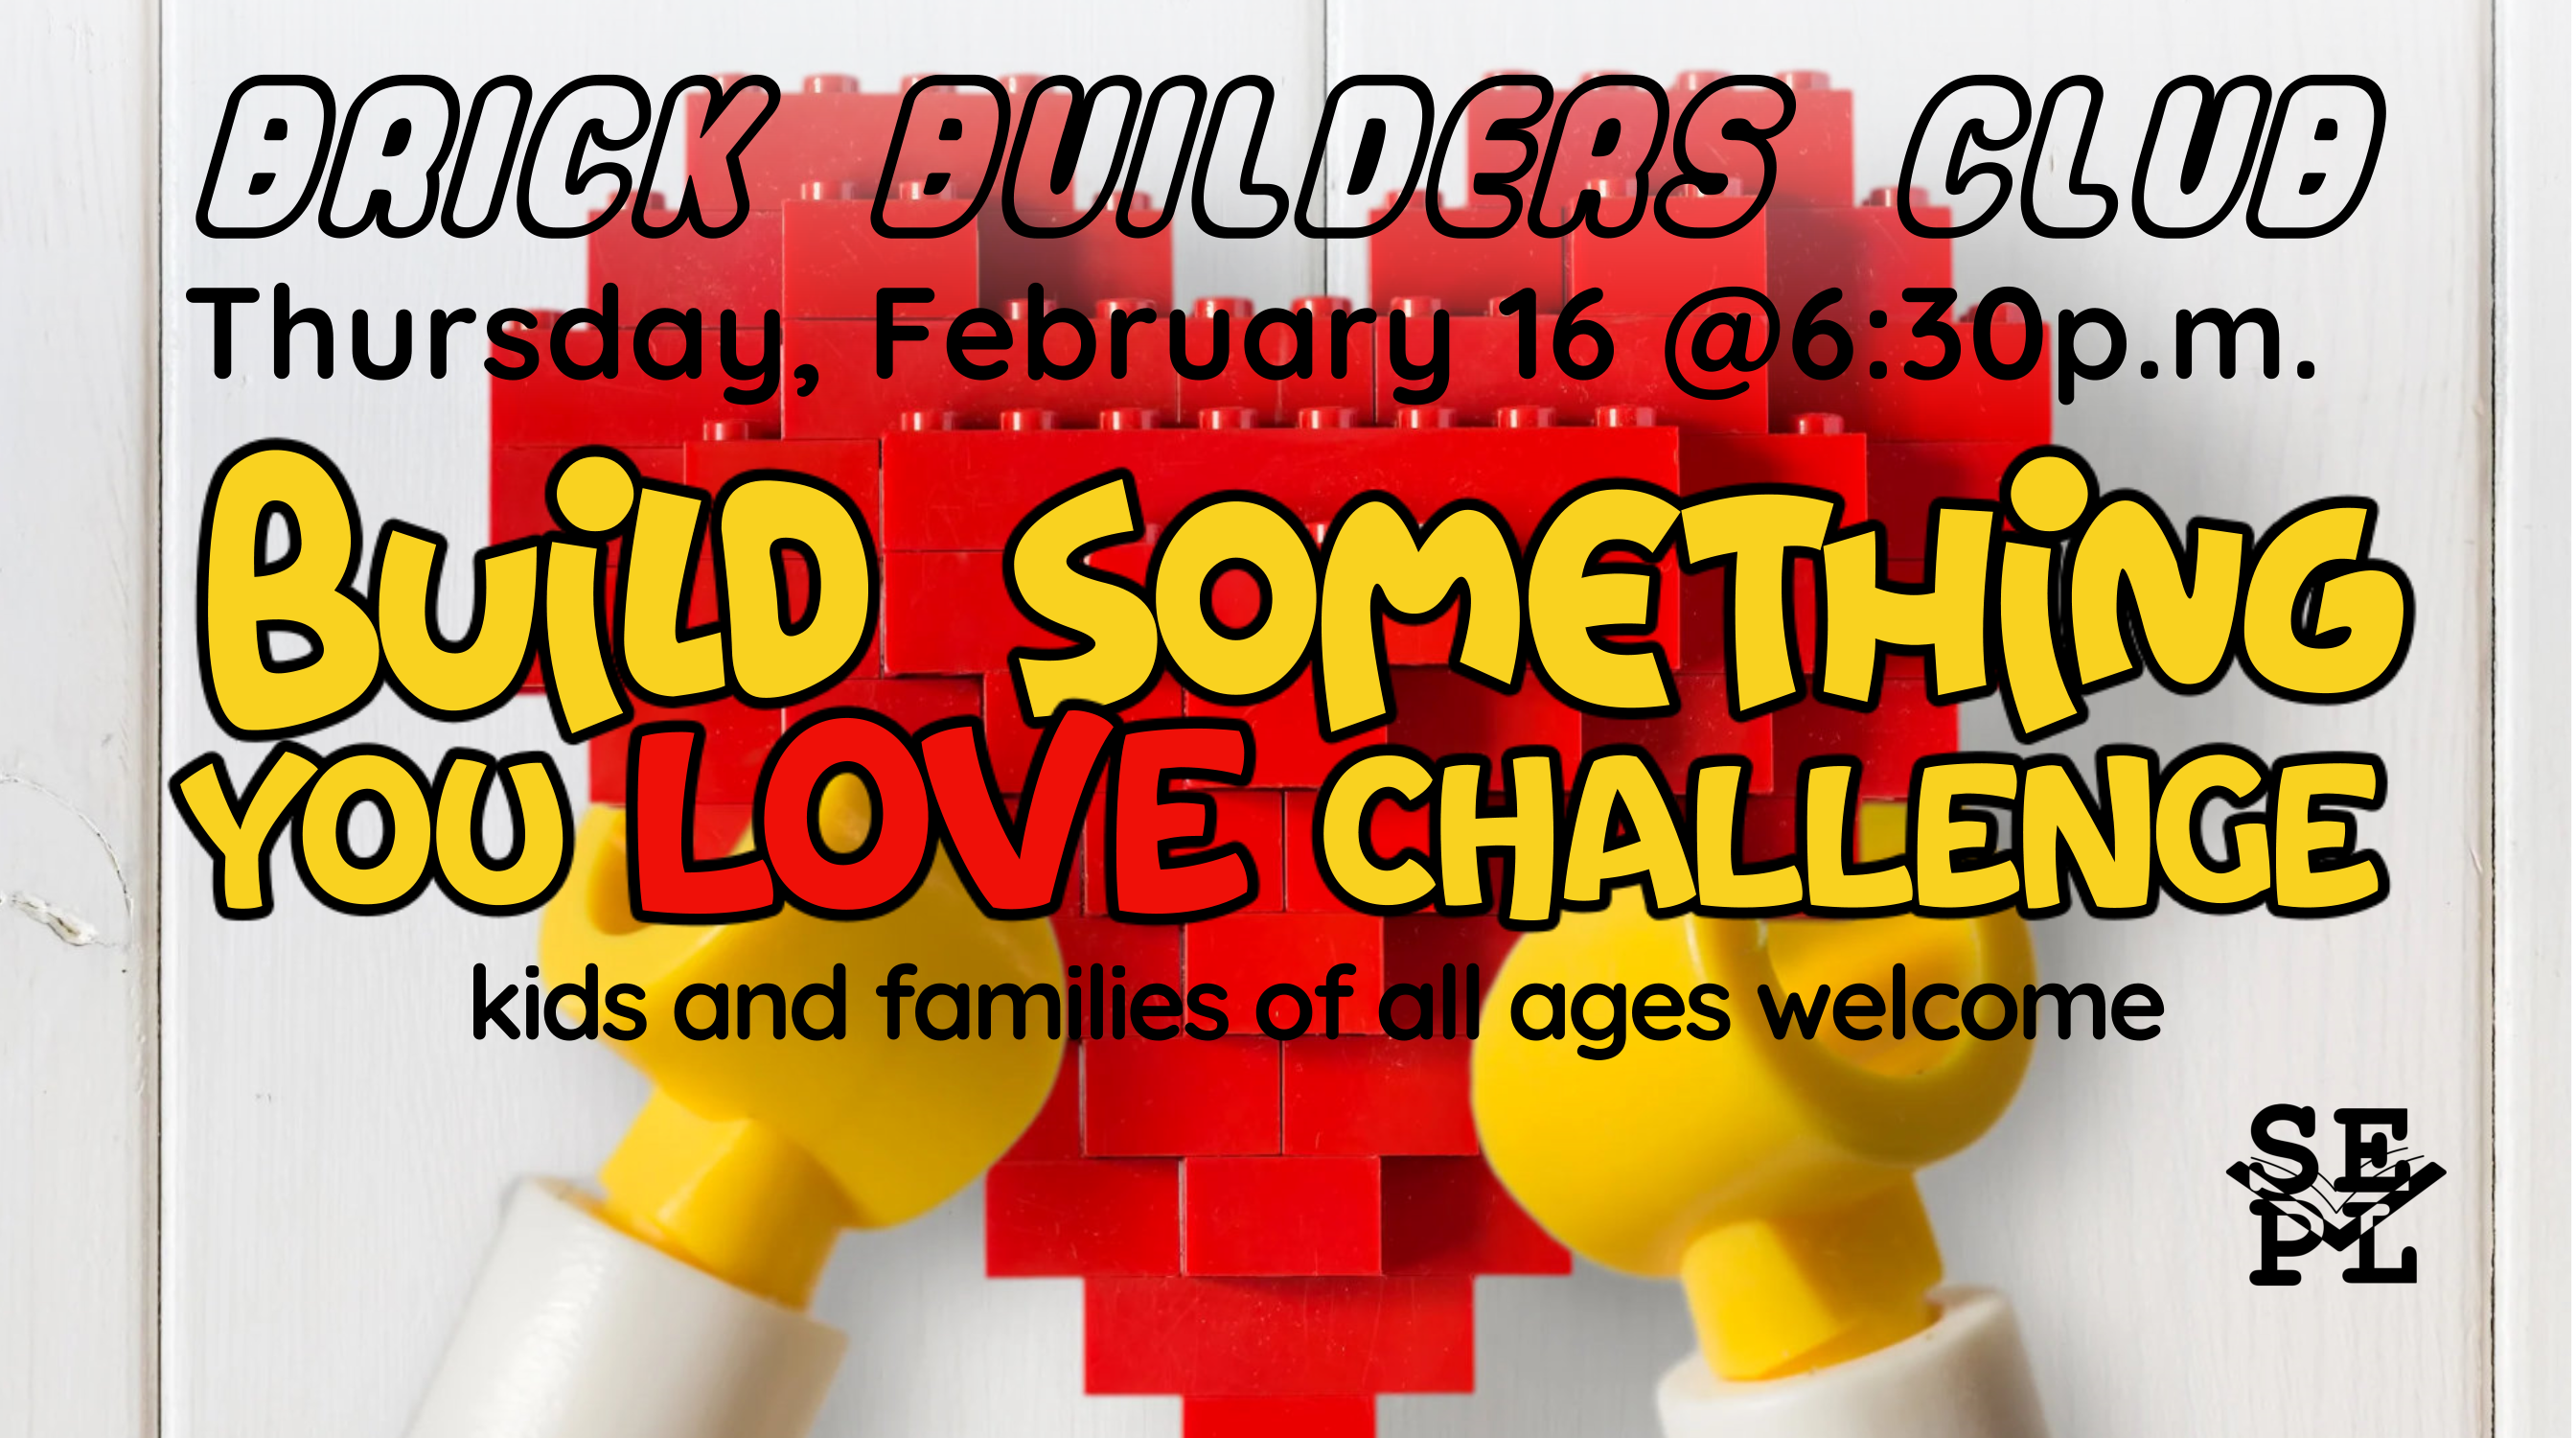 Brick Builders Club LOVE Challenge